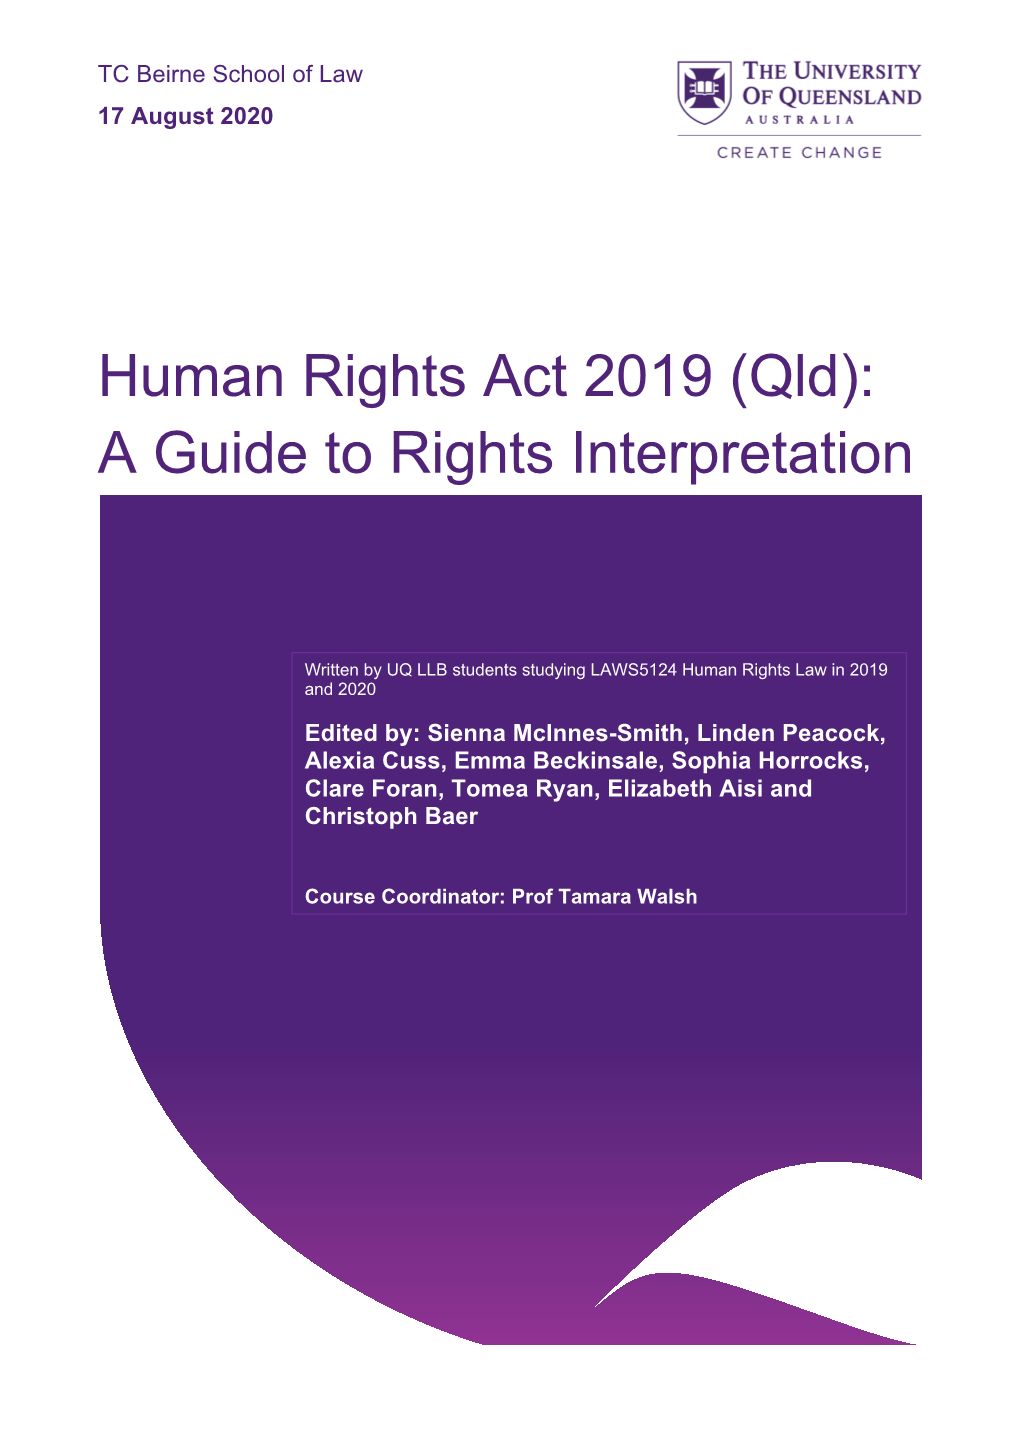 Human Rights Act 2019 (Qld): a Guide to Rights Interpretation